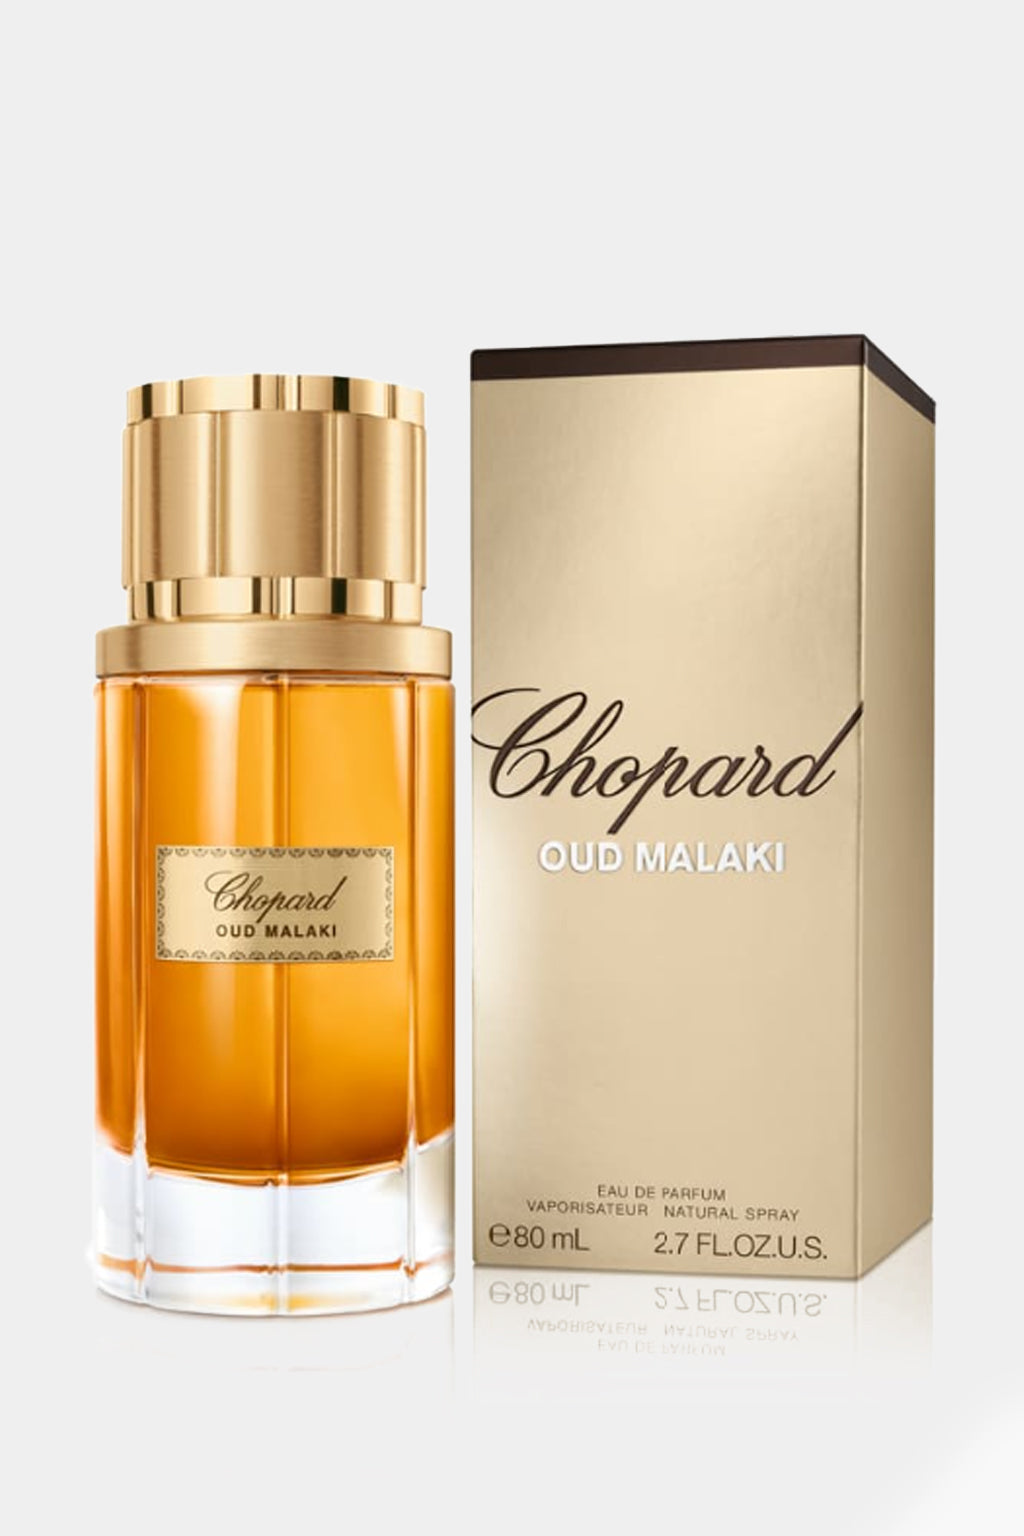 Chopard - Oud Malaki Eau de Parfum